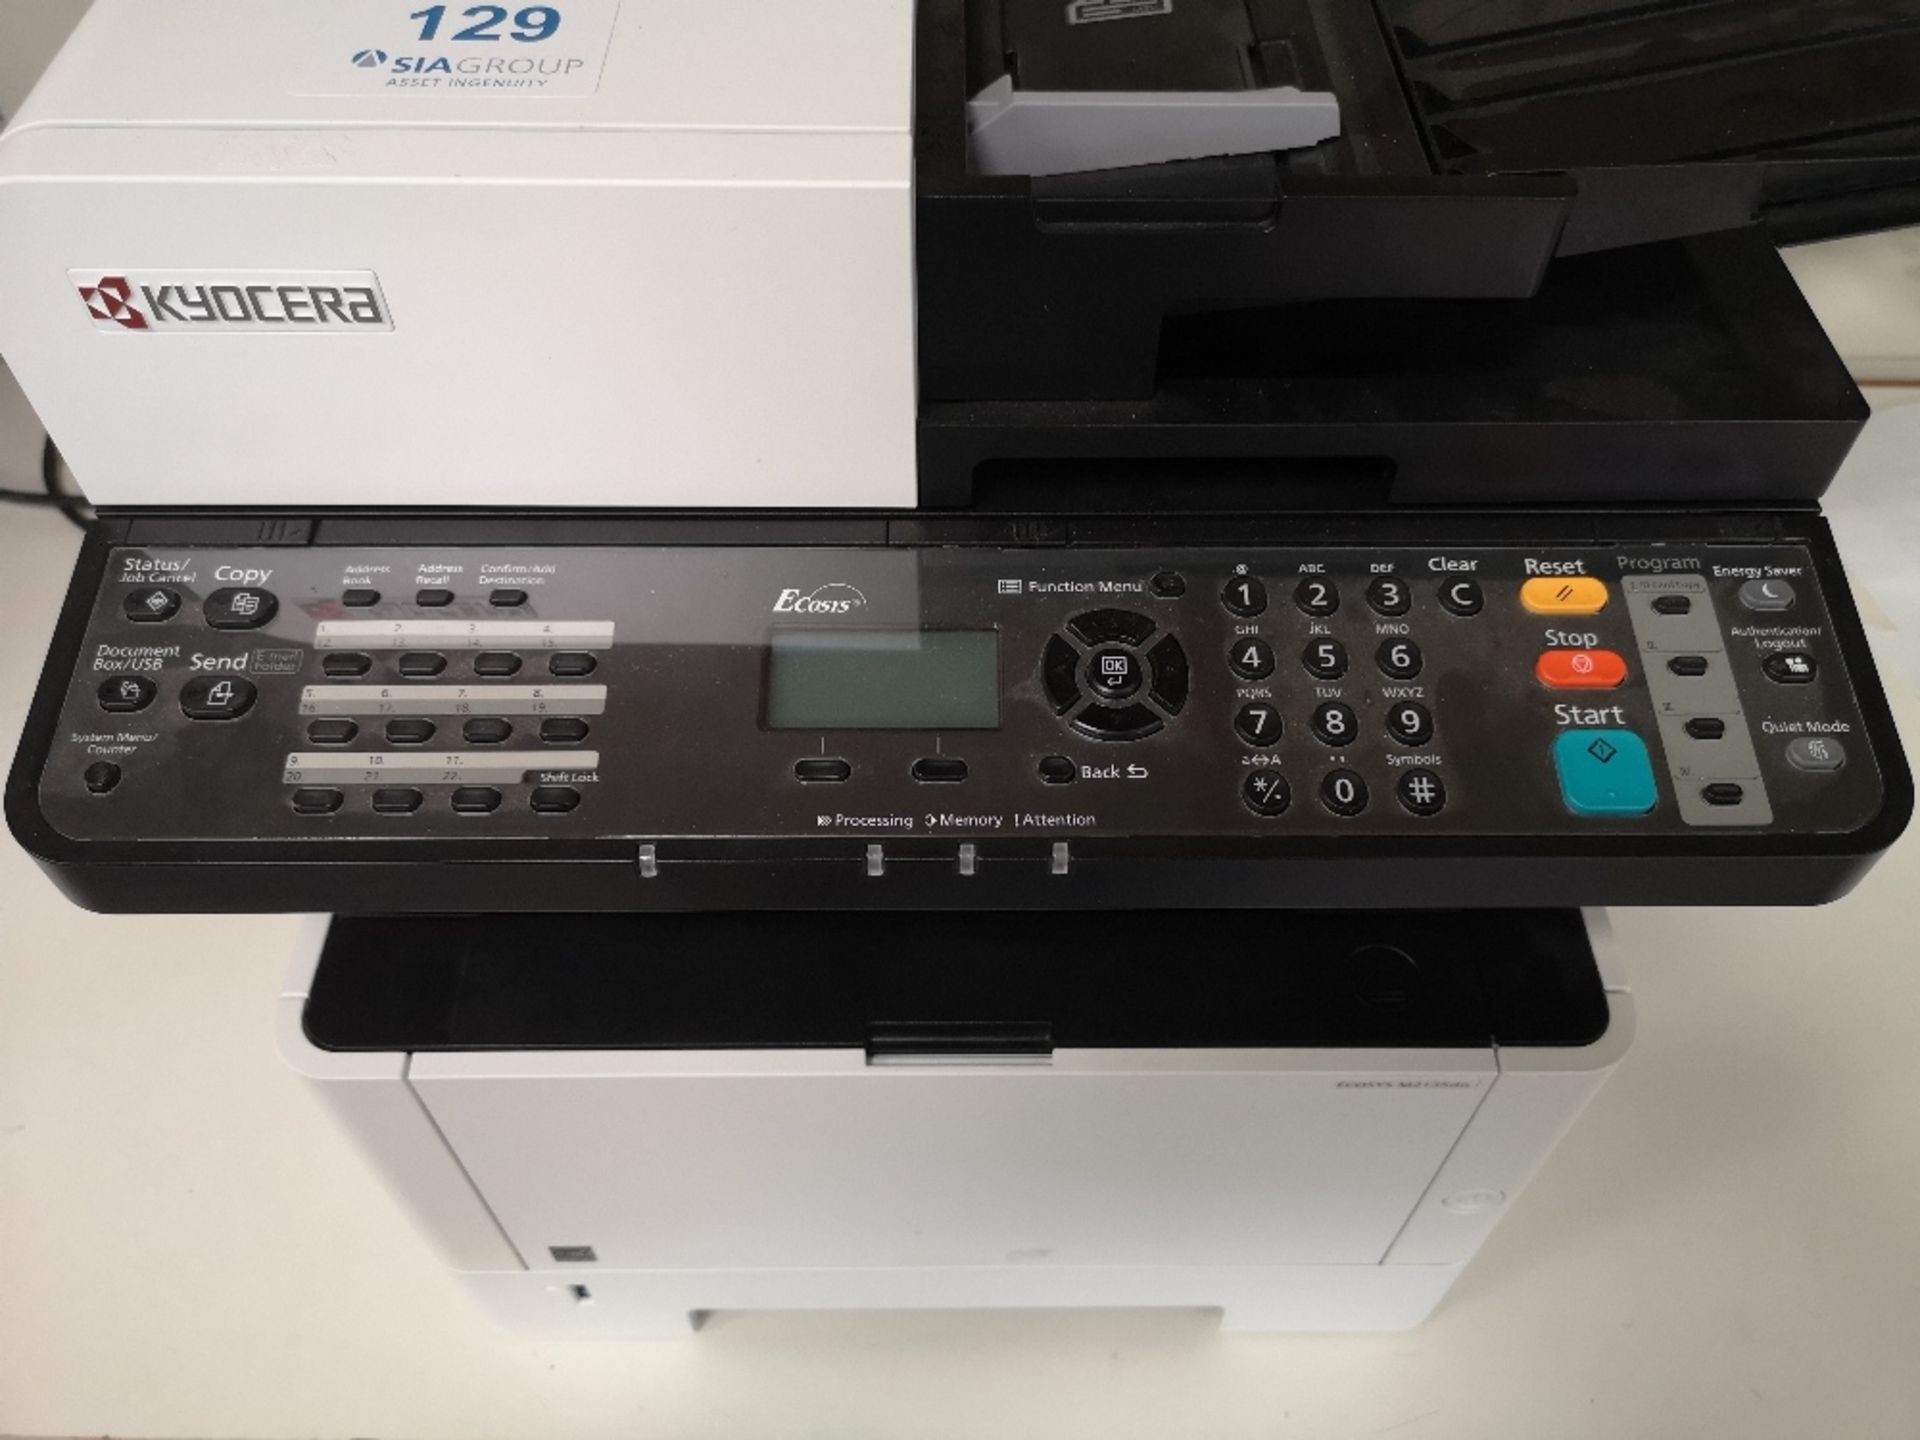 Kyocera Ecosys M2135cn Printer/Scanner/Photocopier - Image 4 of 4